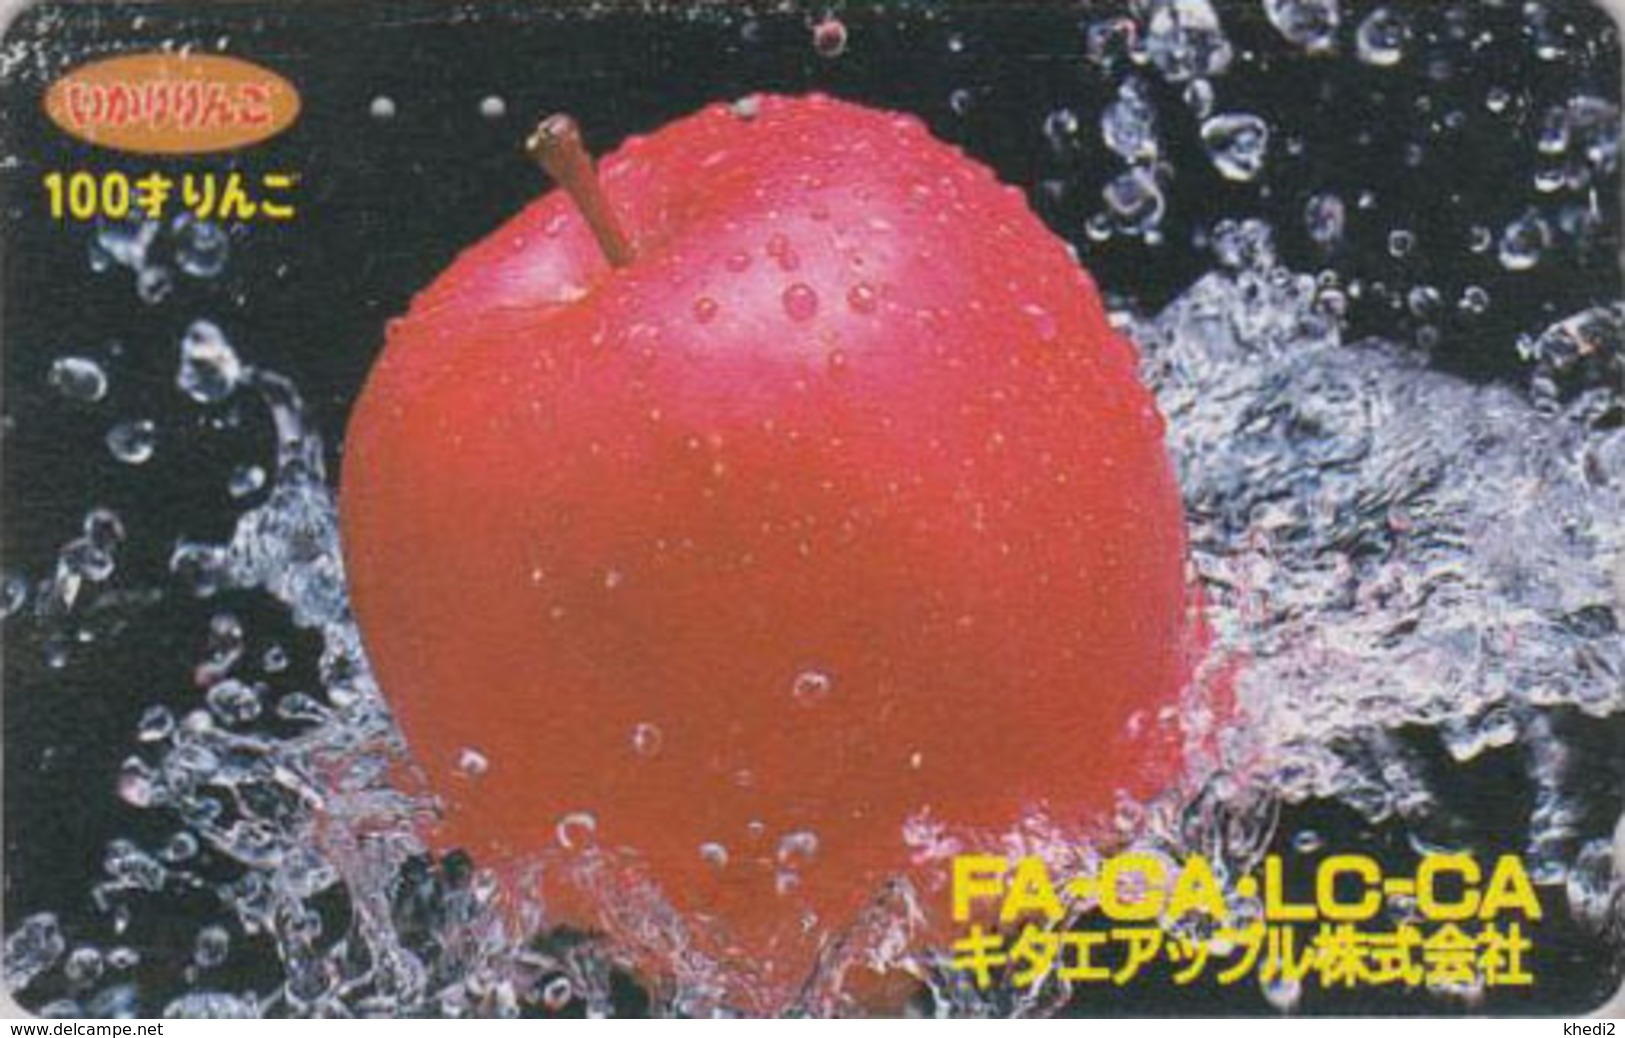 Télécarte Japon / 110-016 - Fruit POMME - APPLE Fruit Japan Phonecard - APFEL Obst TK - 60 - Lebensmittel